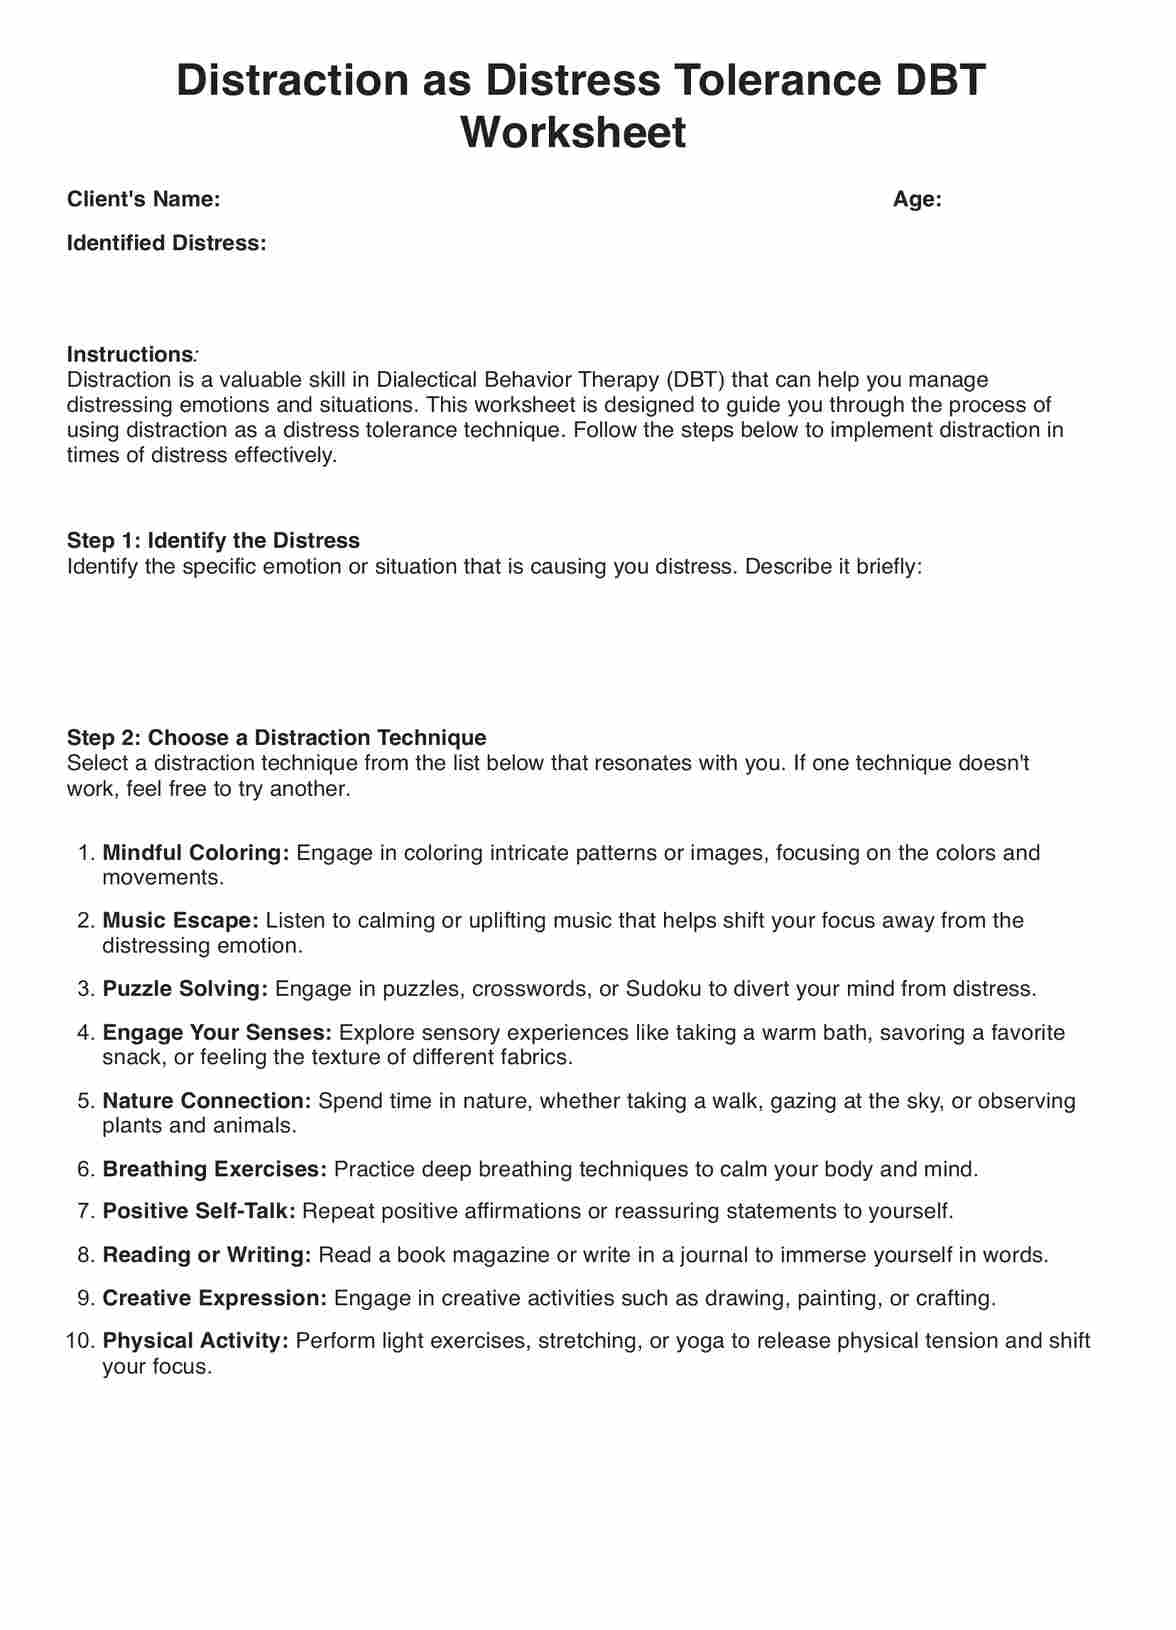 Distraction as Distress Tolerance DBT Worksheet PDF Example